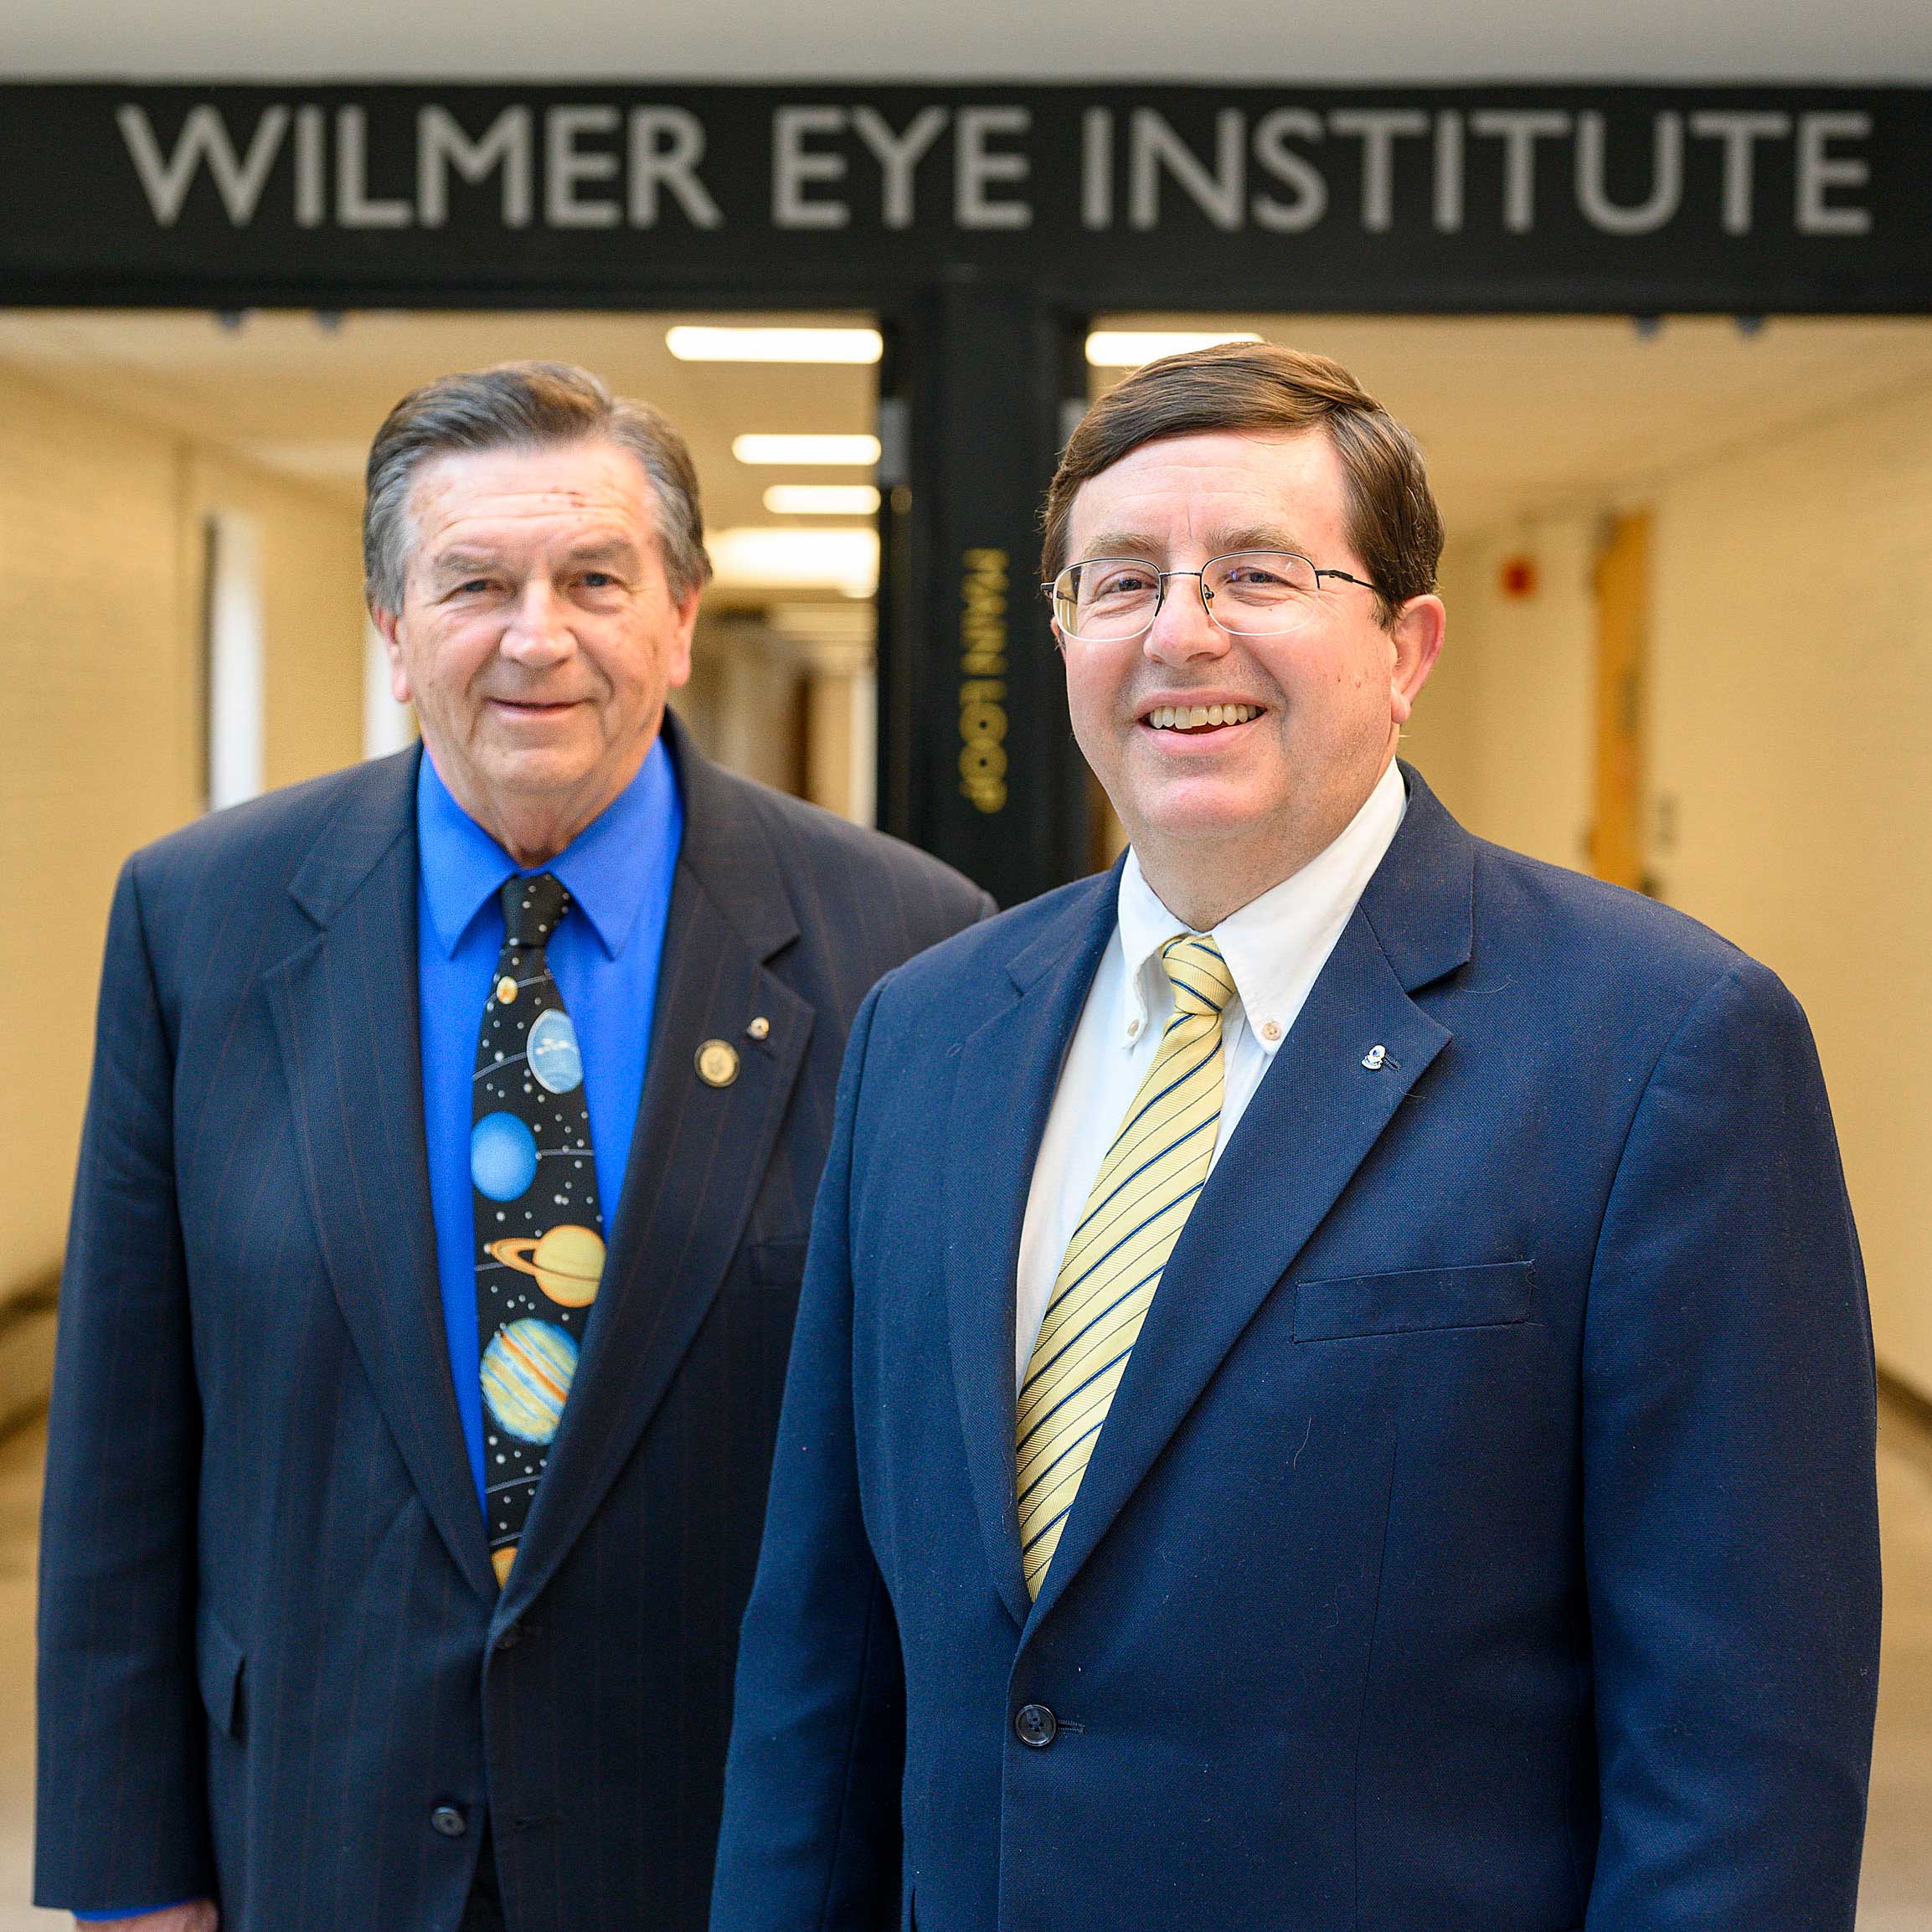 Lions John Shwed, left, and Larry Burton standing inside the Wilmer Eye Institute